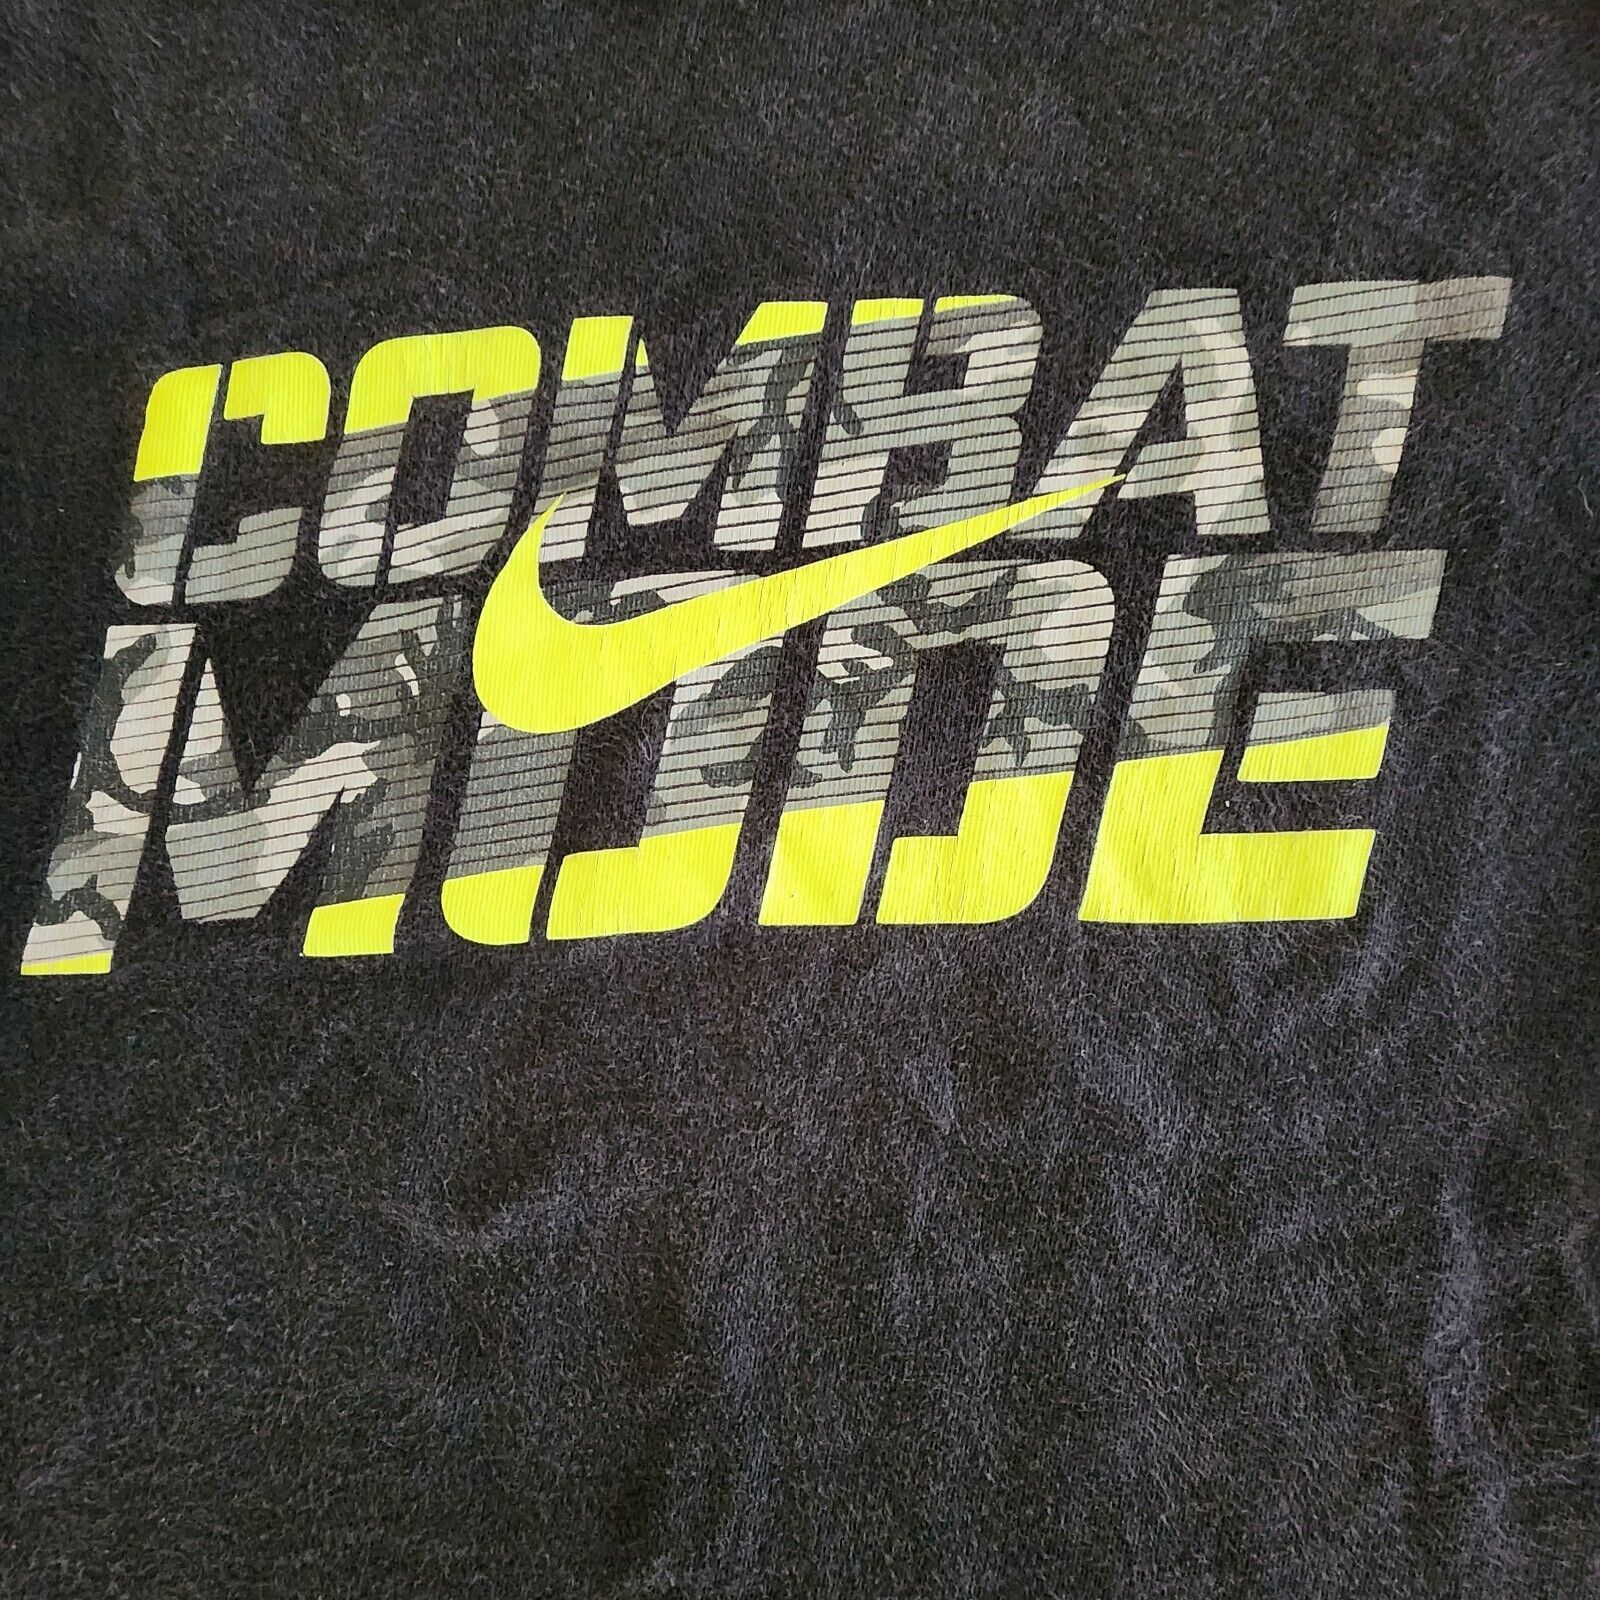 Creo que estoy enfermo Casco Lógico Nike Combat Zone Black Cotton T-Shirt Kids M (bin16) | eBay